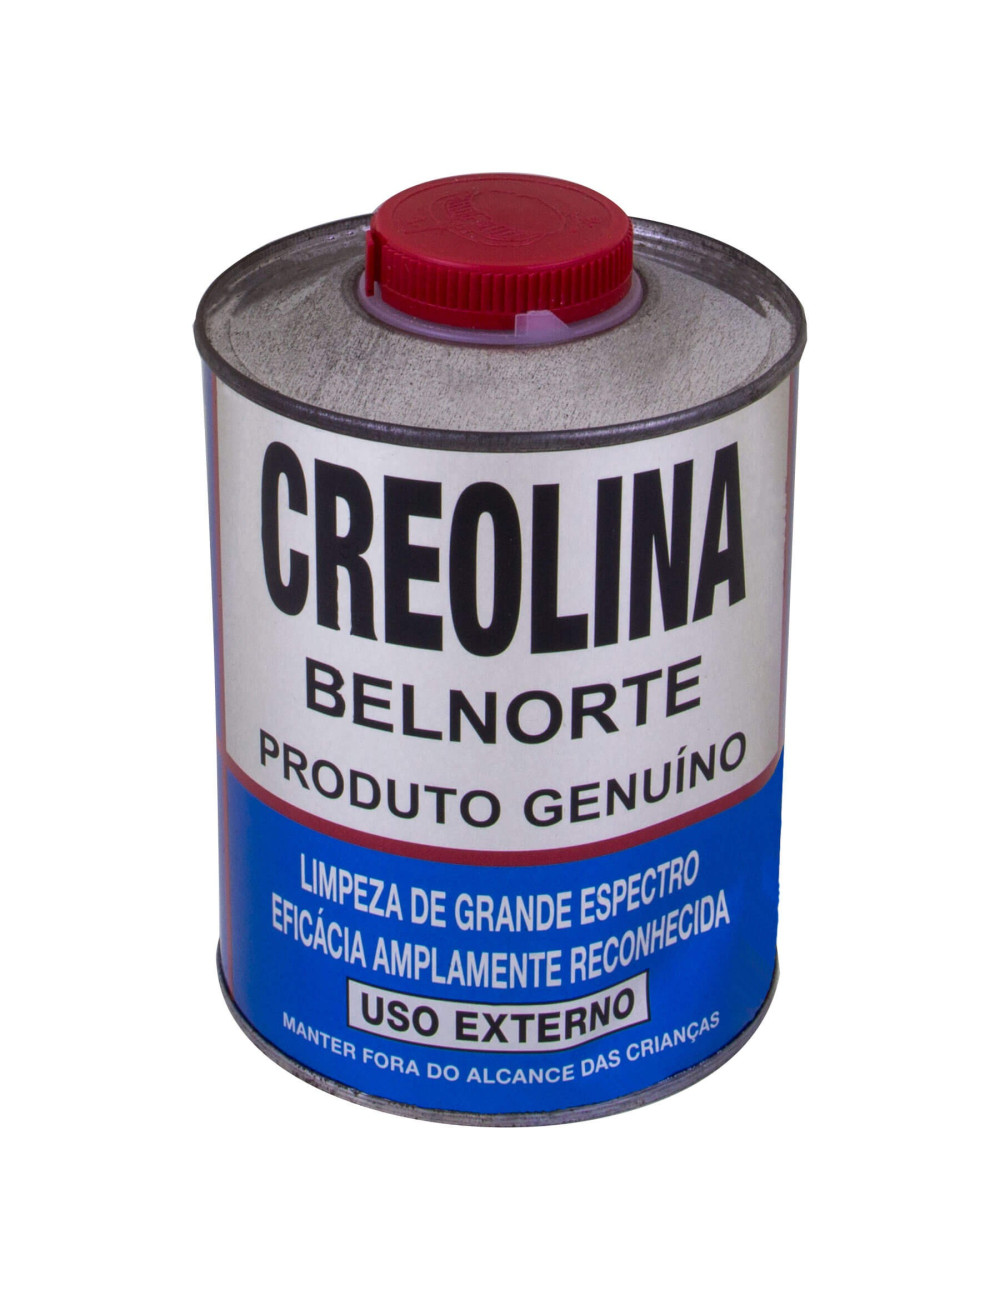 Creolina 1 L